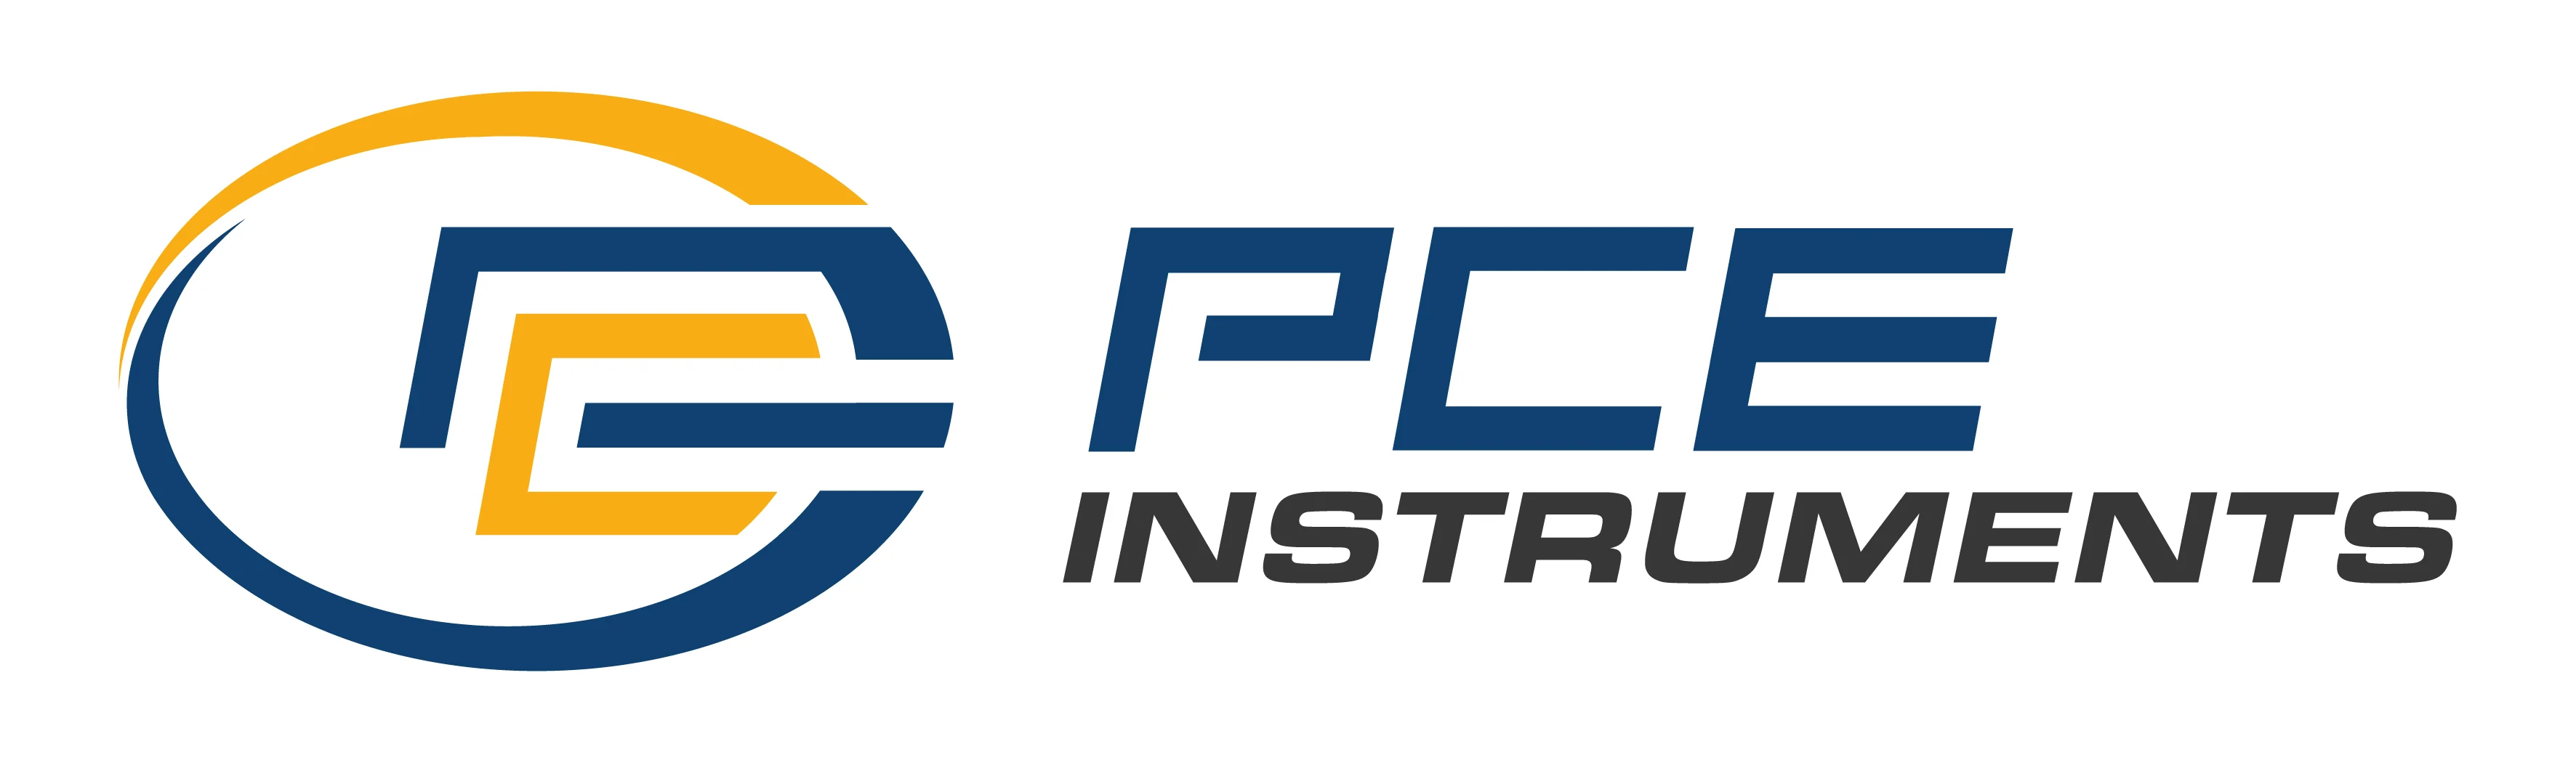 pce-instruments-logo-300dpi.webp